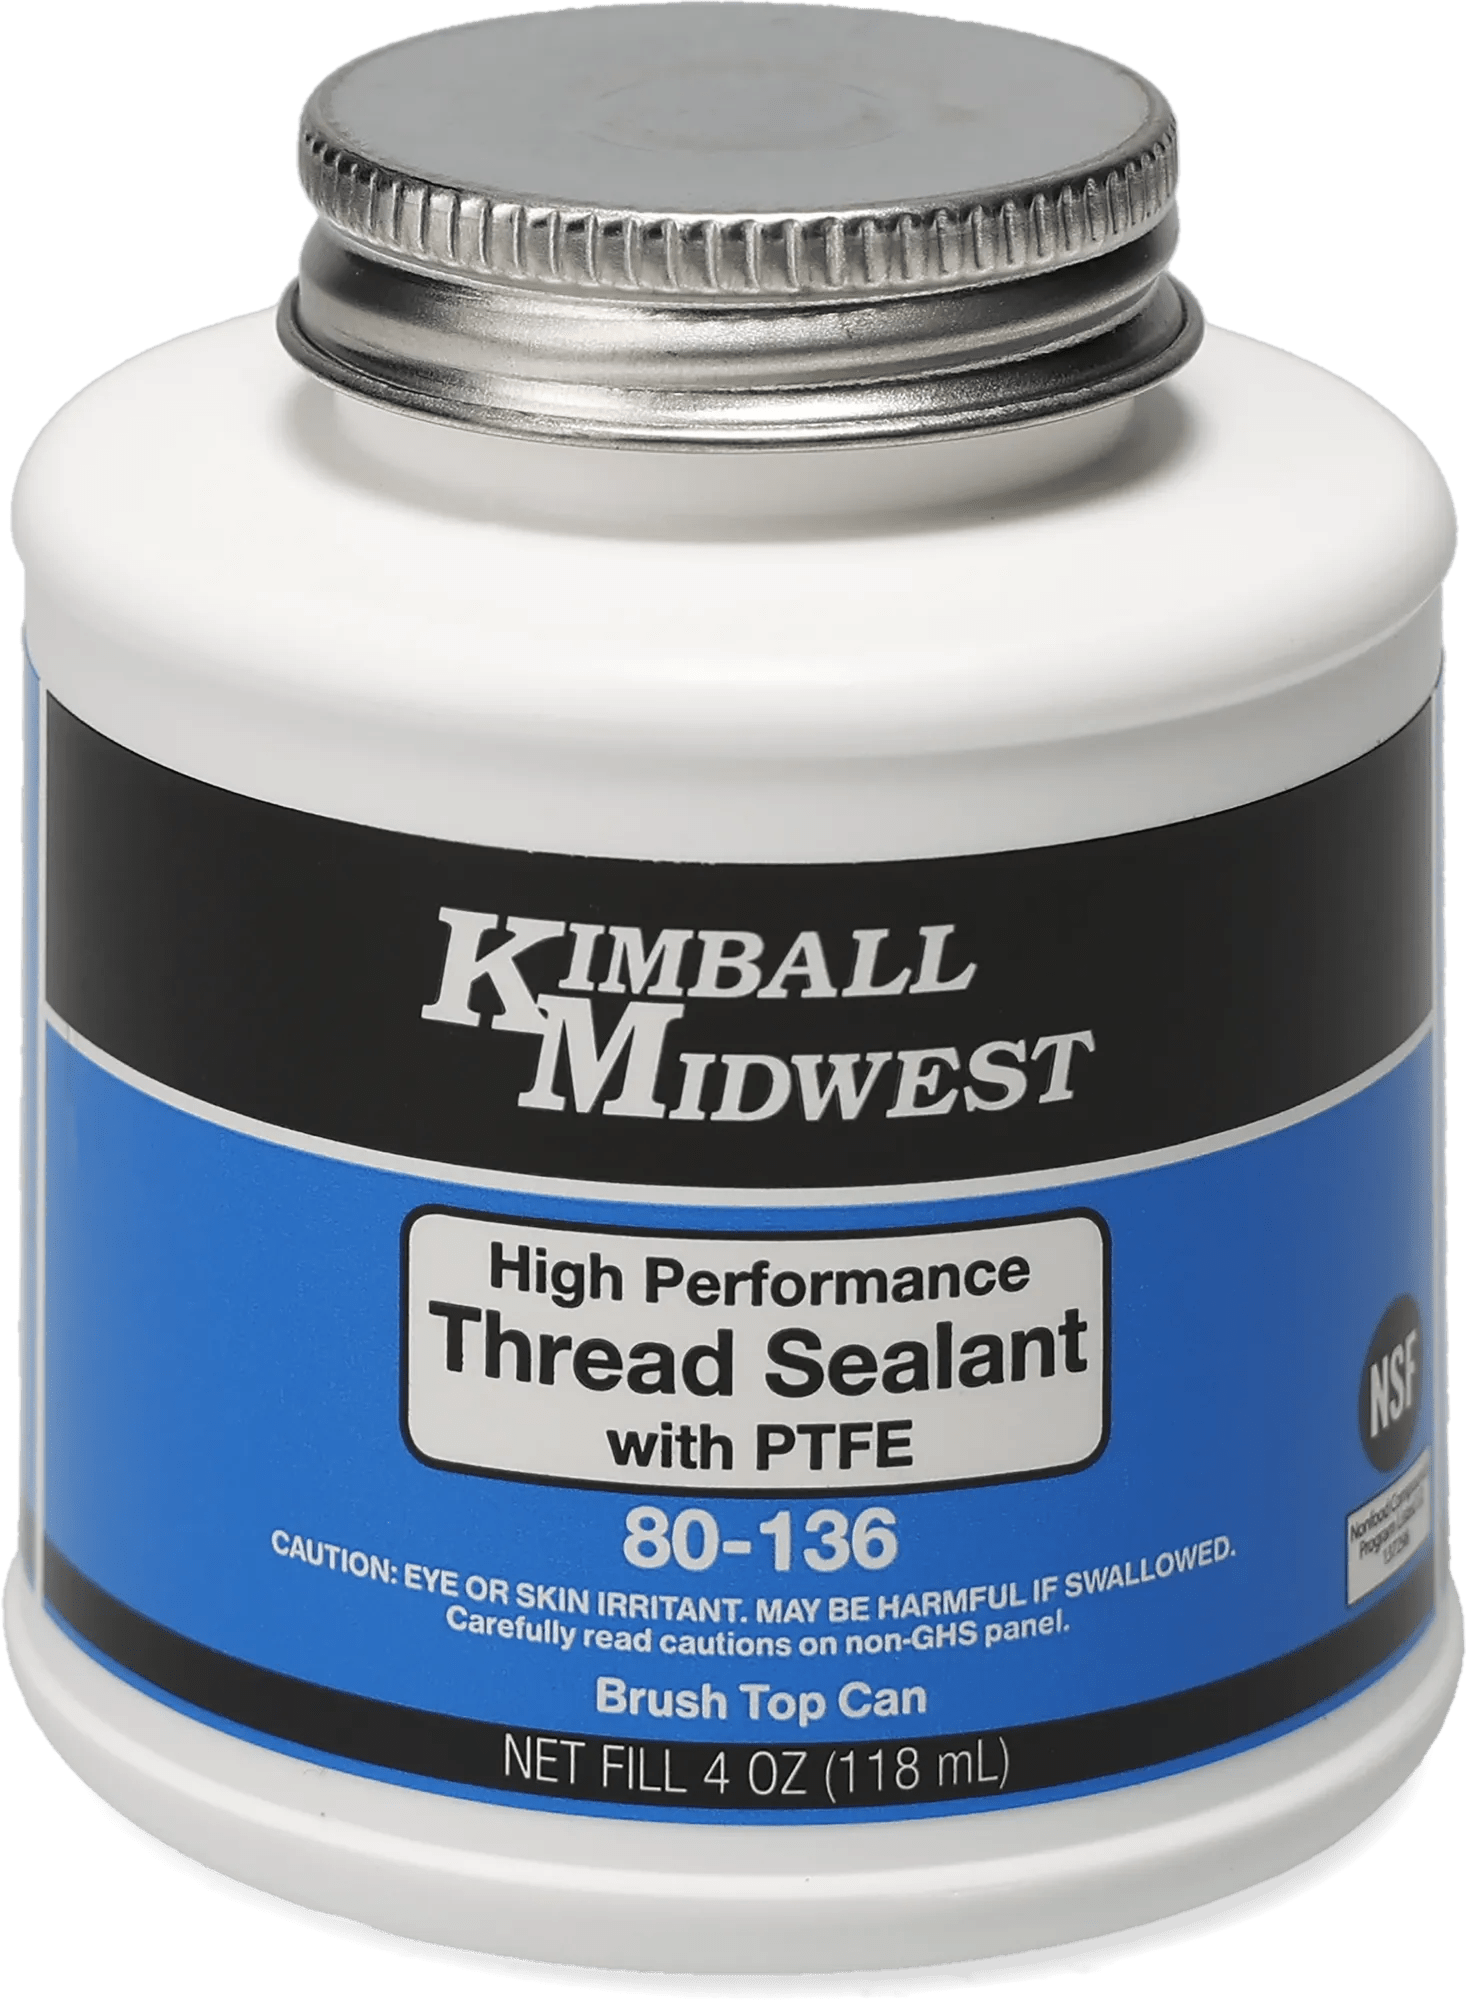 Thread Sealant with PTFE - 1/4 Pint